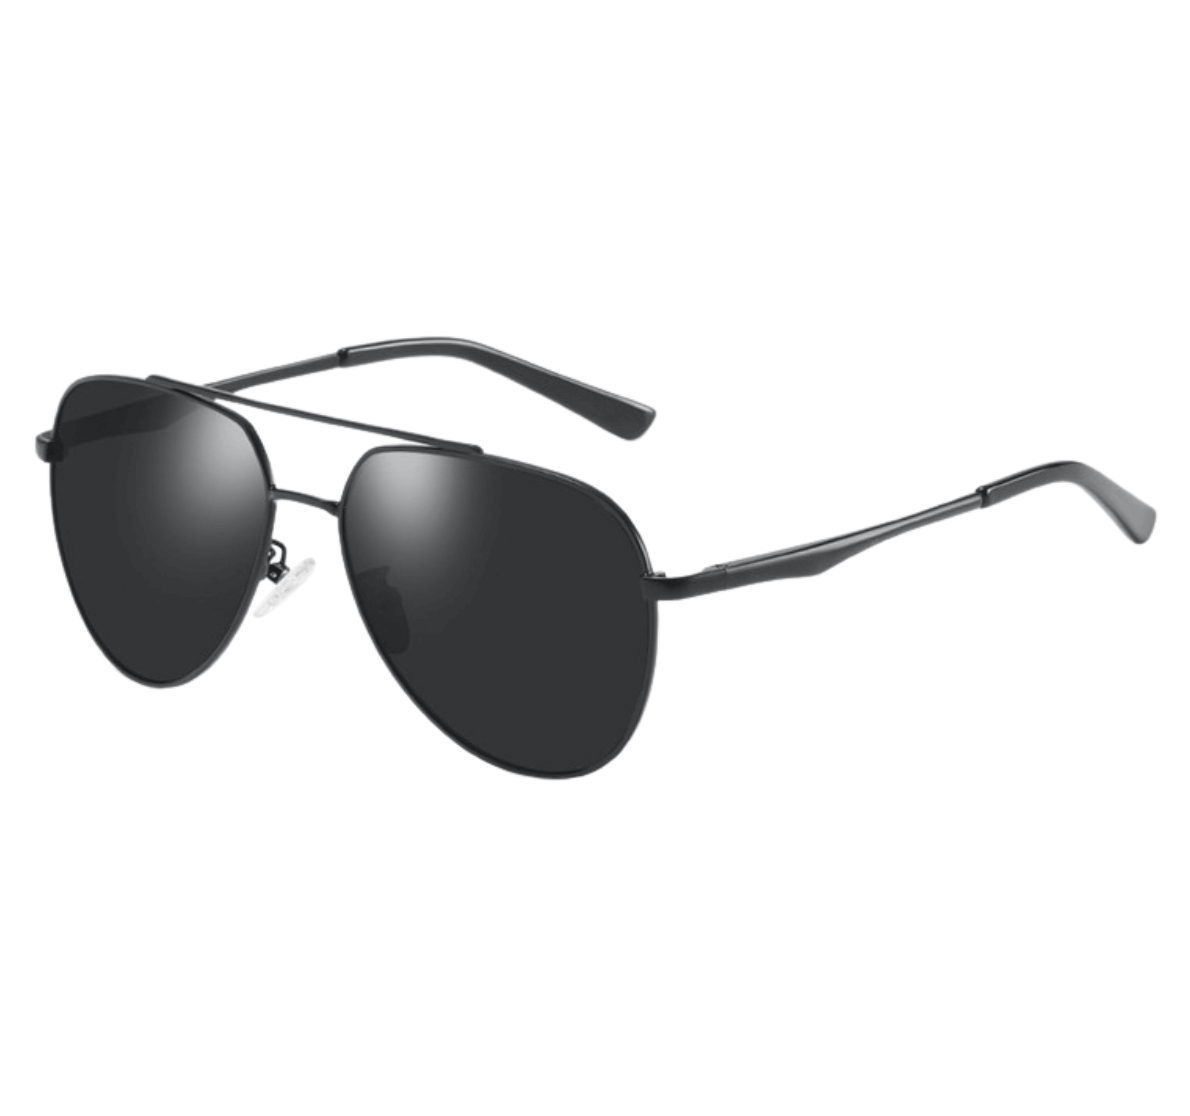 Wholesale Aviator Sunglasses, Aviator Classic sunglasses, Classic Aviator Sunglasses, retro aviator sunglasses mens, Sunglasses Manufacturer